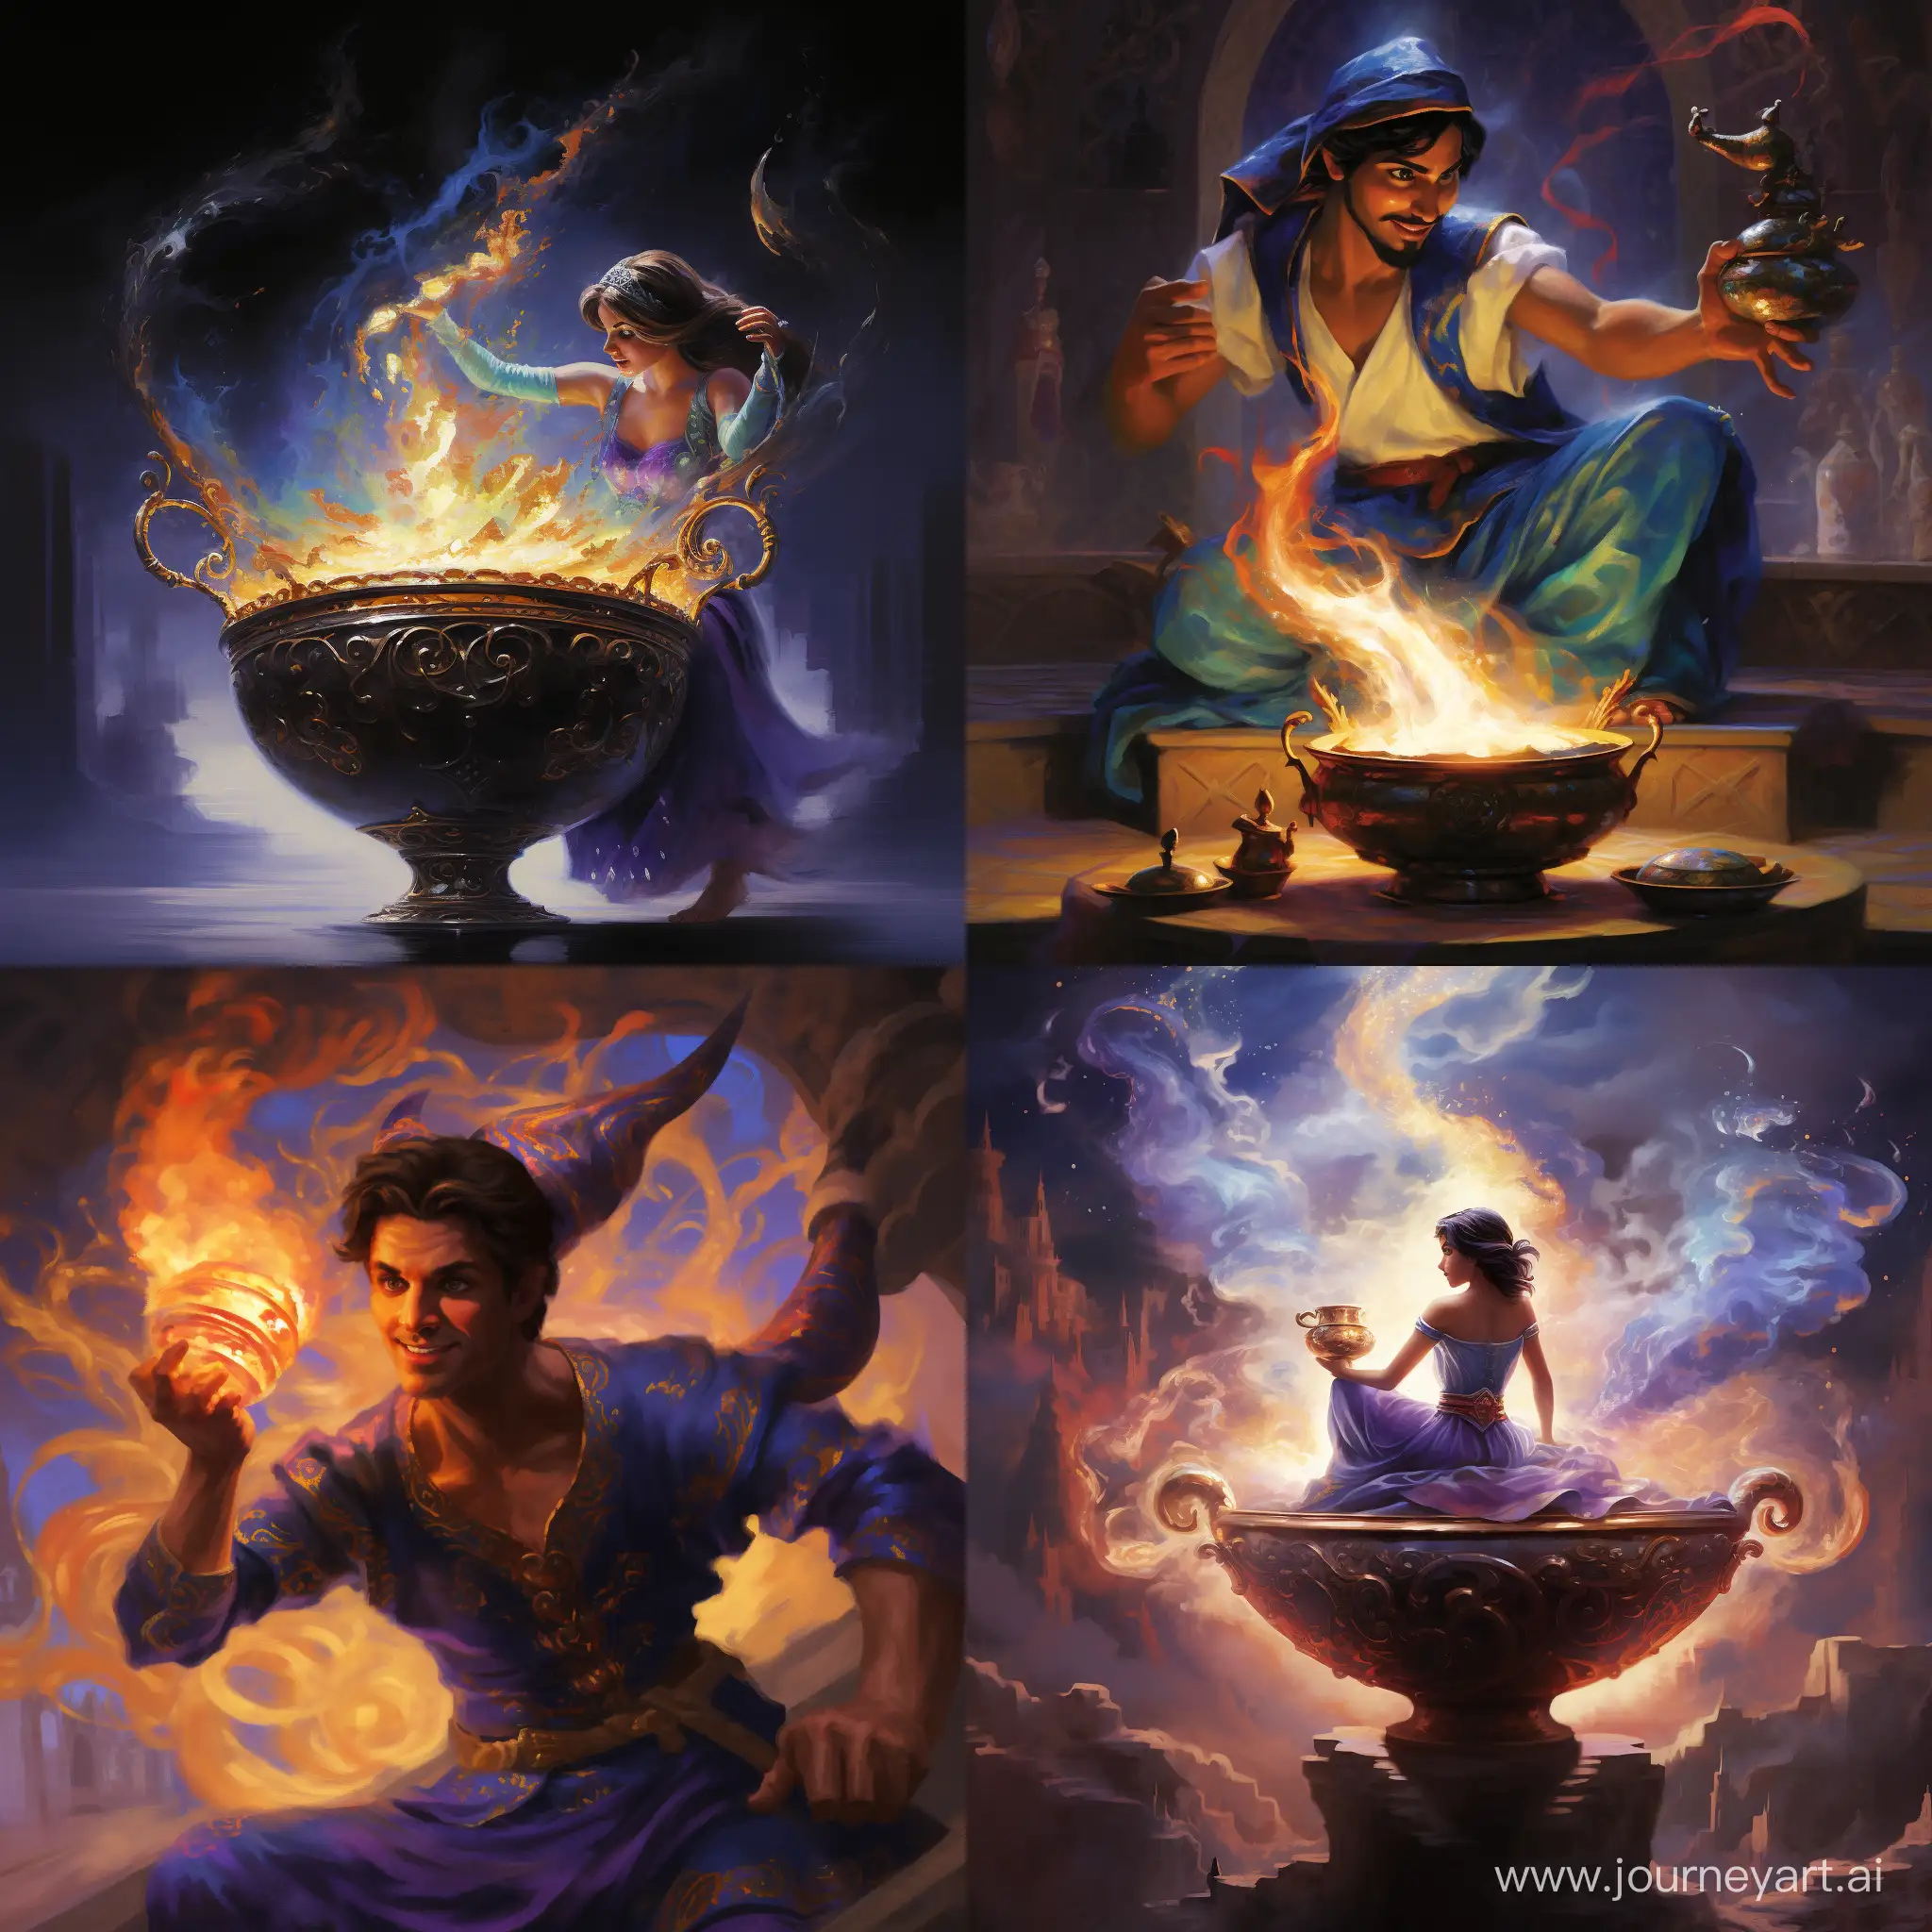 Majestic-Genie-Emerges-from-Aladdins-Magic-Lamp